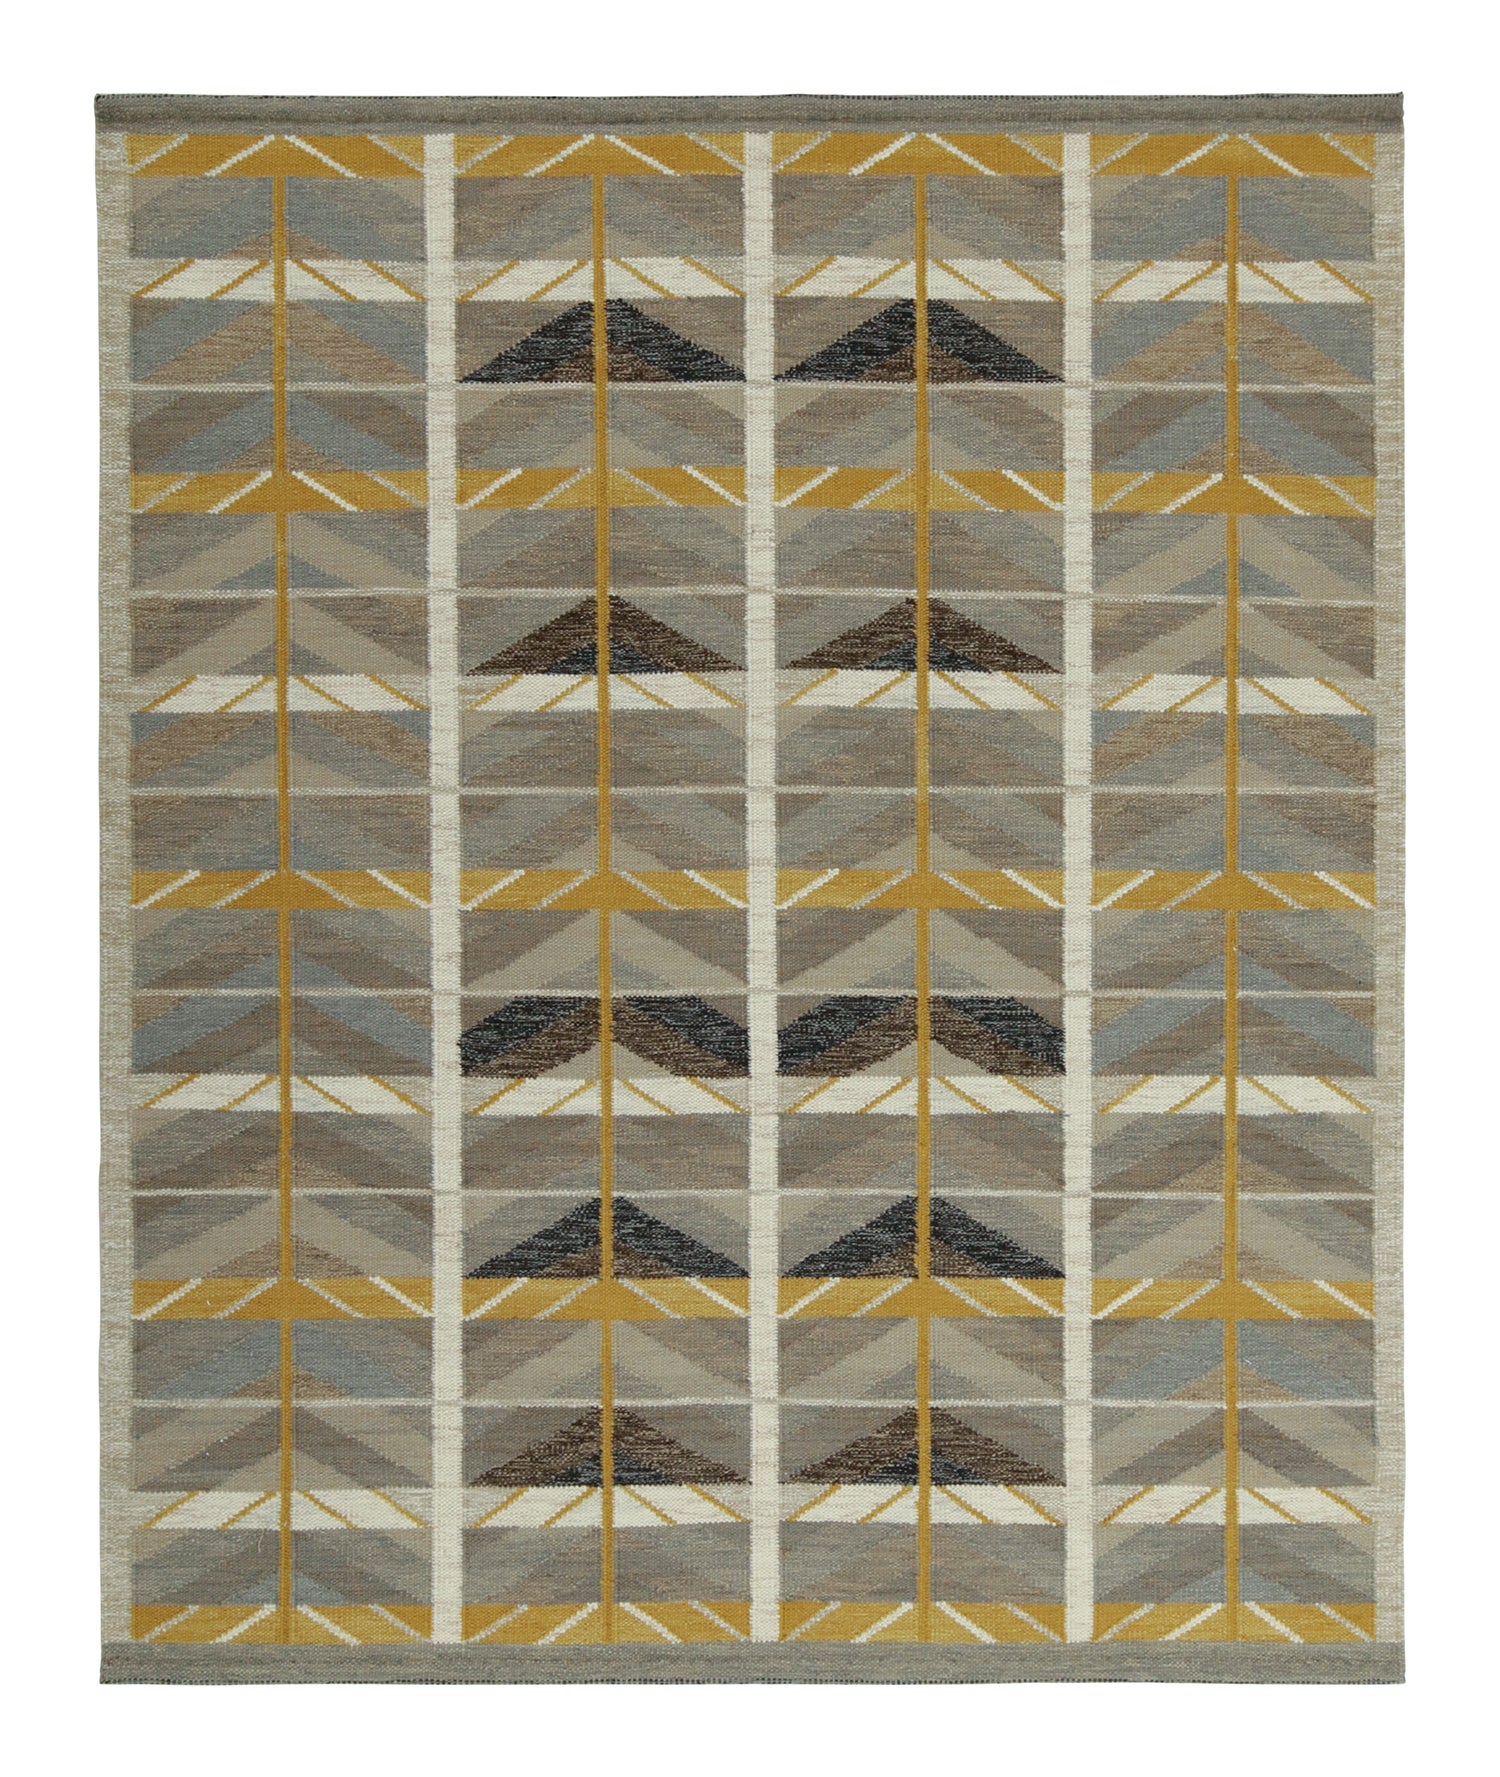 Rug & Kilim’s Scandinavian Style Kilim Rug in Beige-Brown & Gold Geometric Patte For Sale